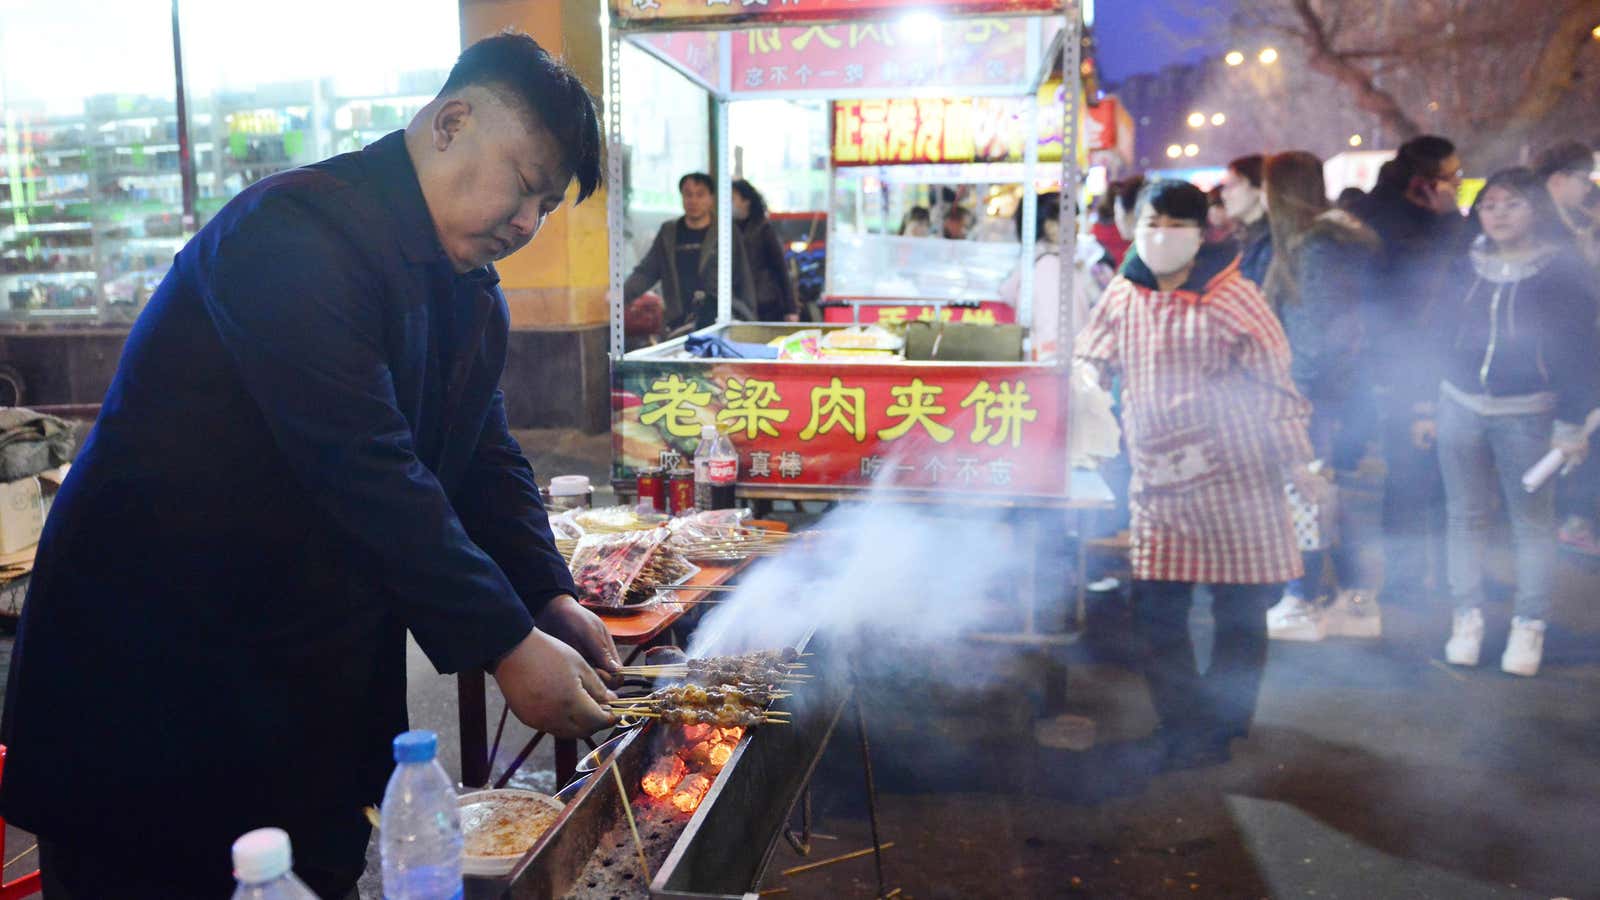 Xia, a 38-year-old lookalike of North Korean leader Kim Jong Un, cooks barbequed lamb at his food stall in China’s Shenyang.